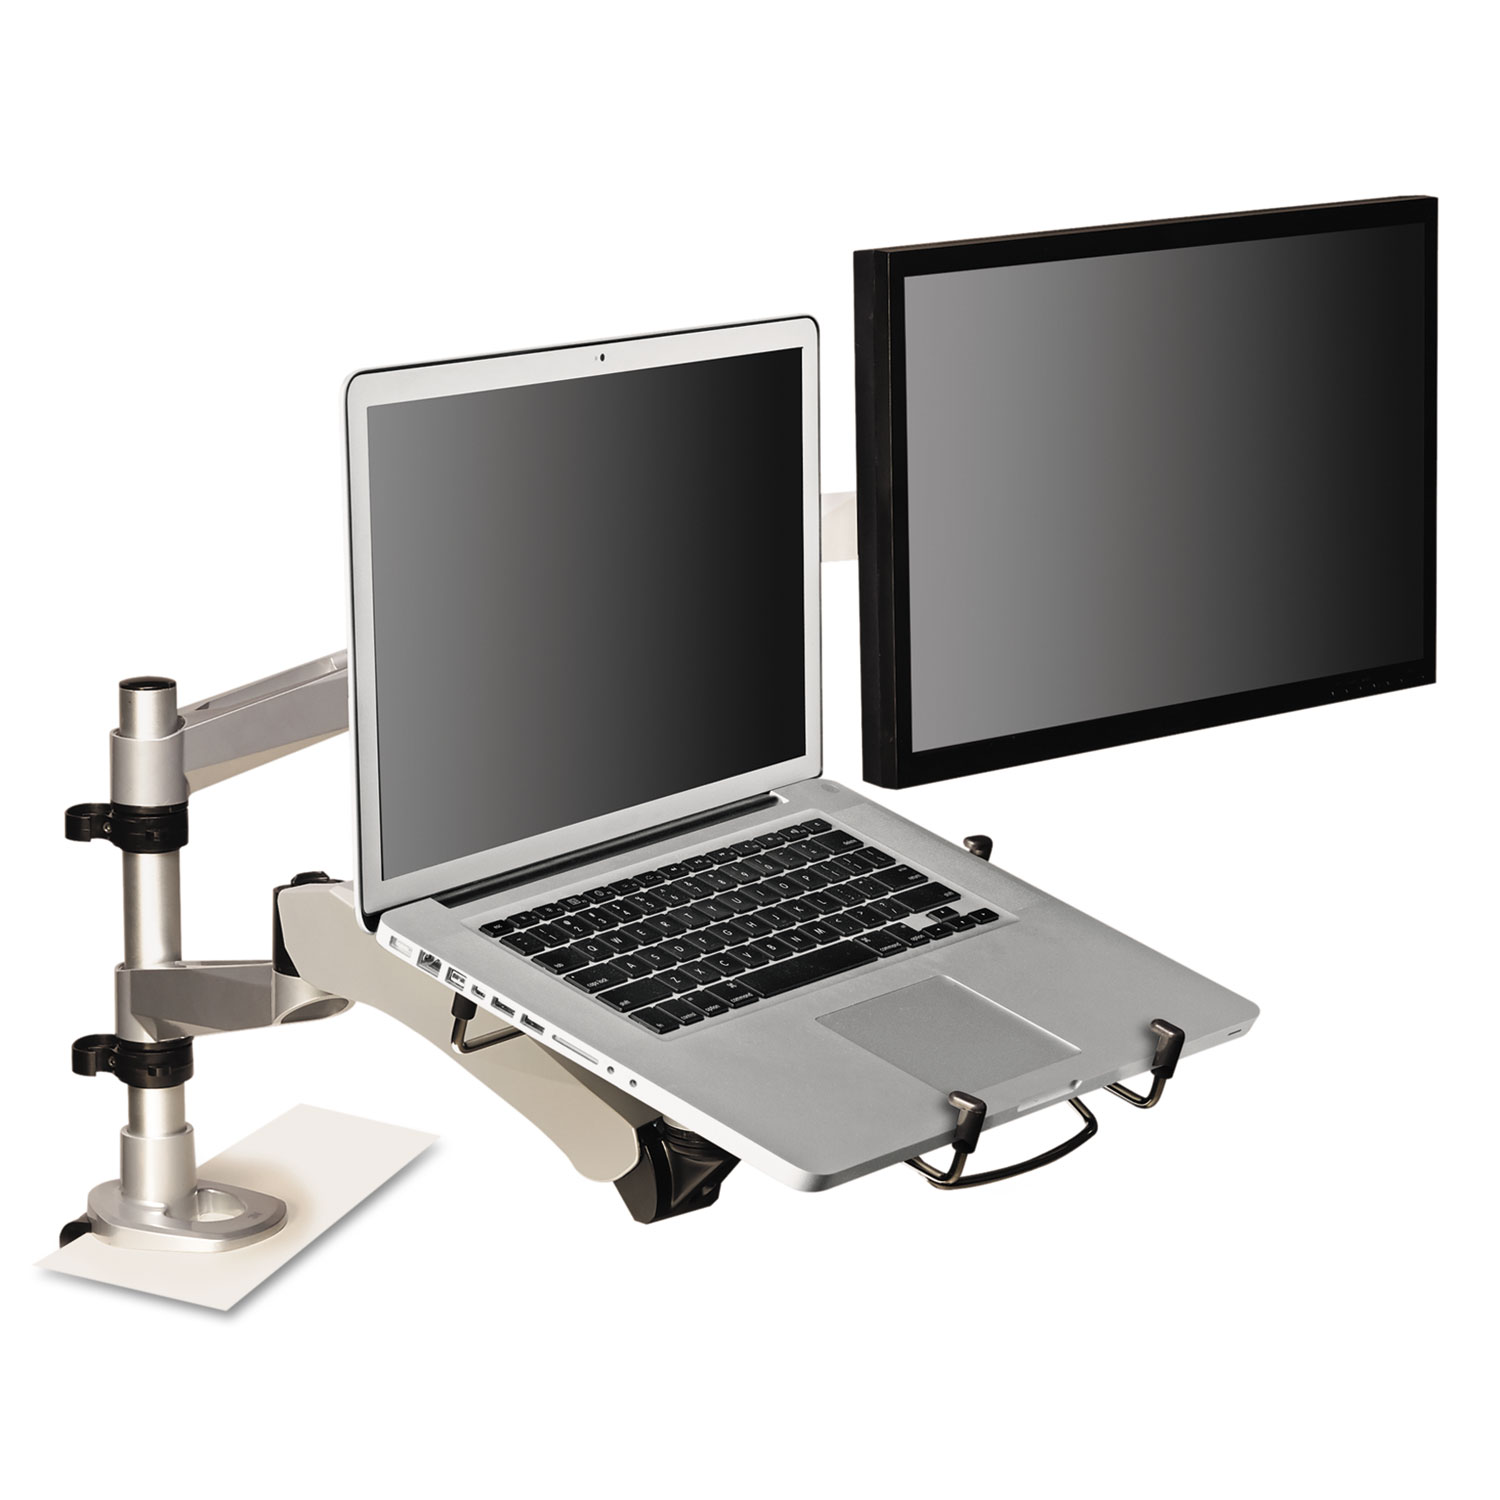  3M MALAPTOP2 Monitor Arm Laptop Adapter, 3.75w x 12.25d x 13.38h, Silver/Black (MMMMALAPTOP2) 